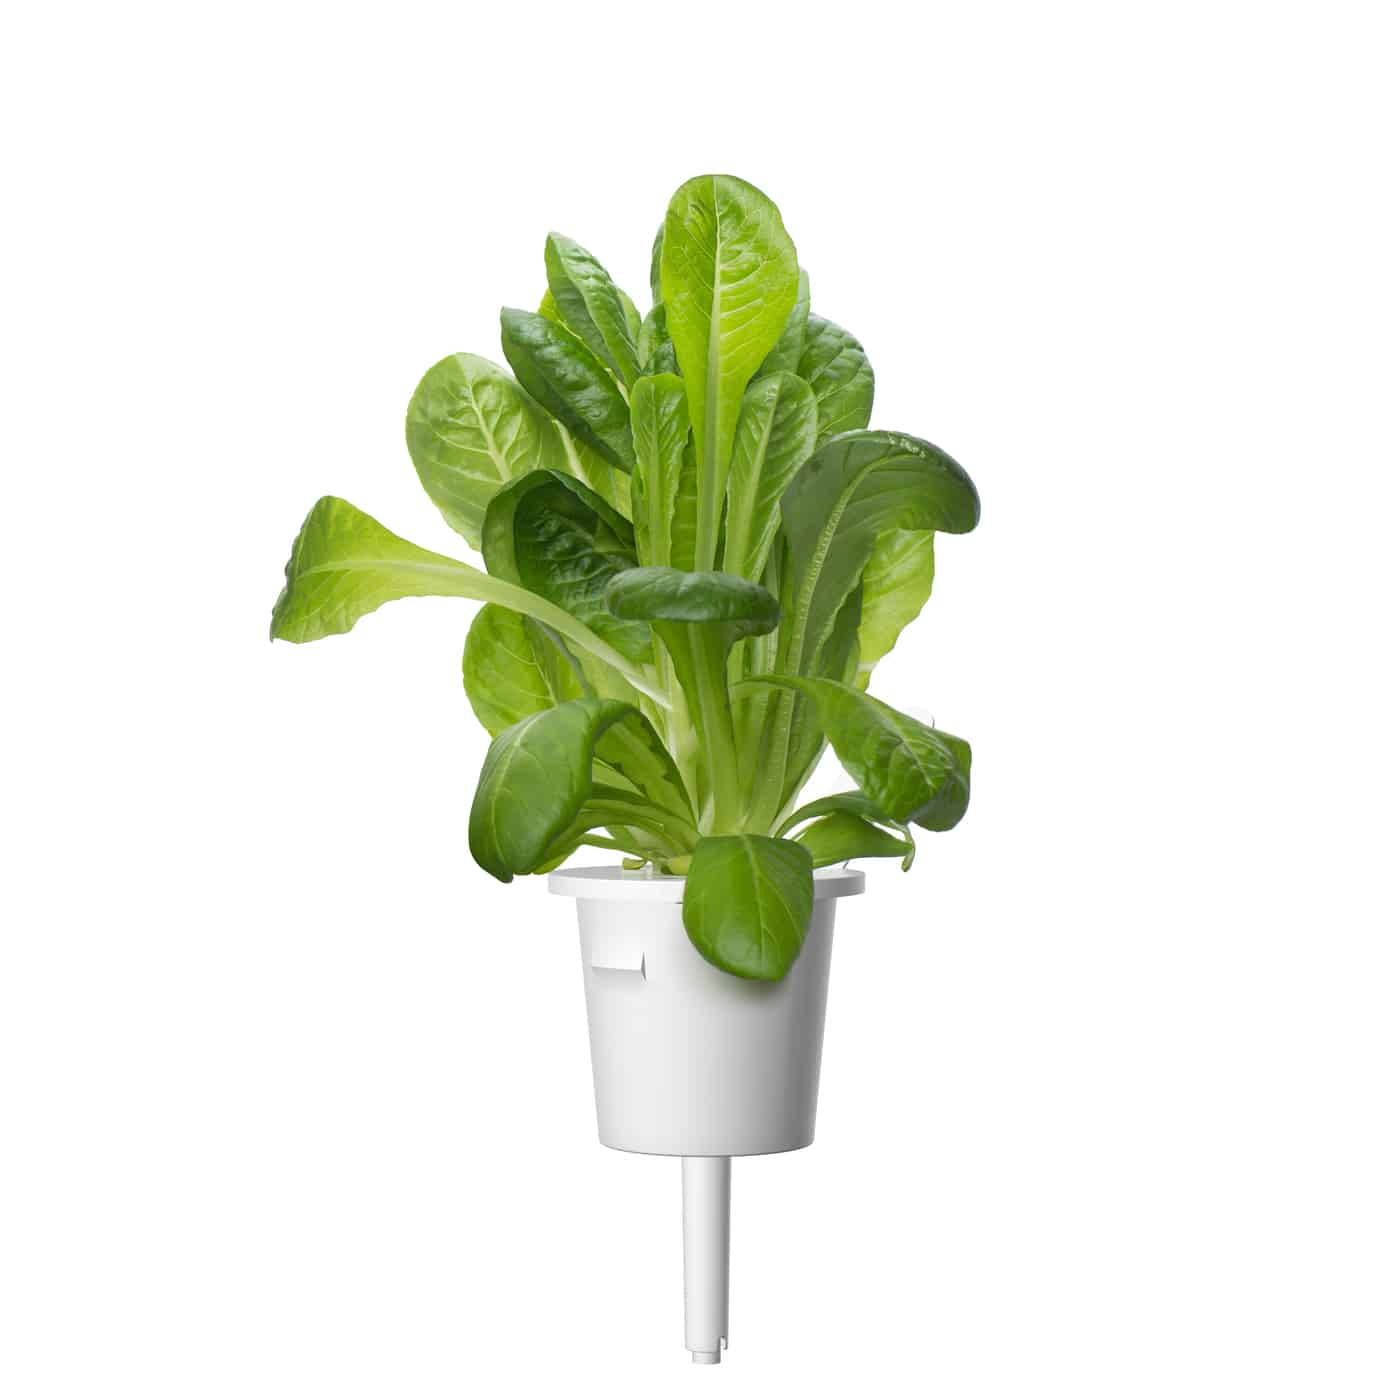 Romaine lettuce plant pod